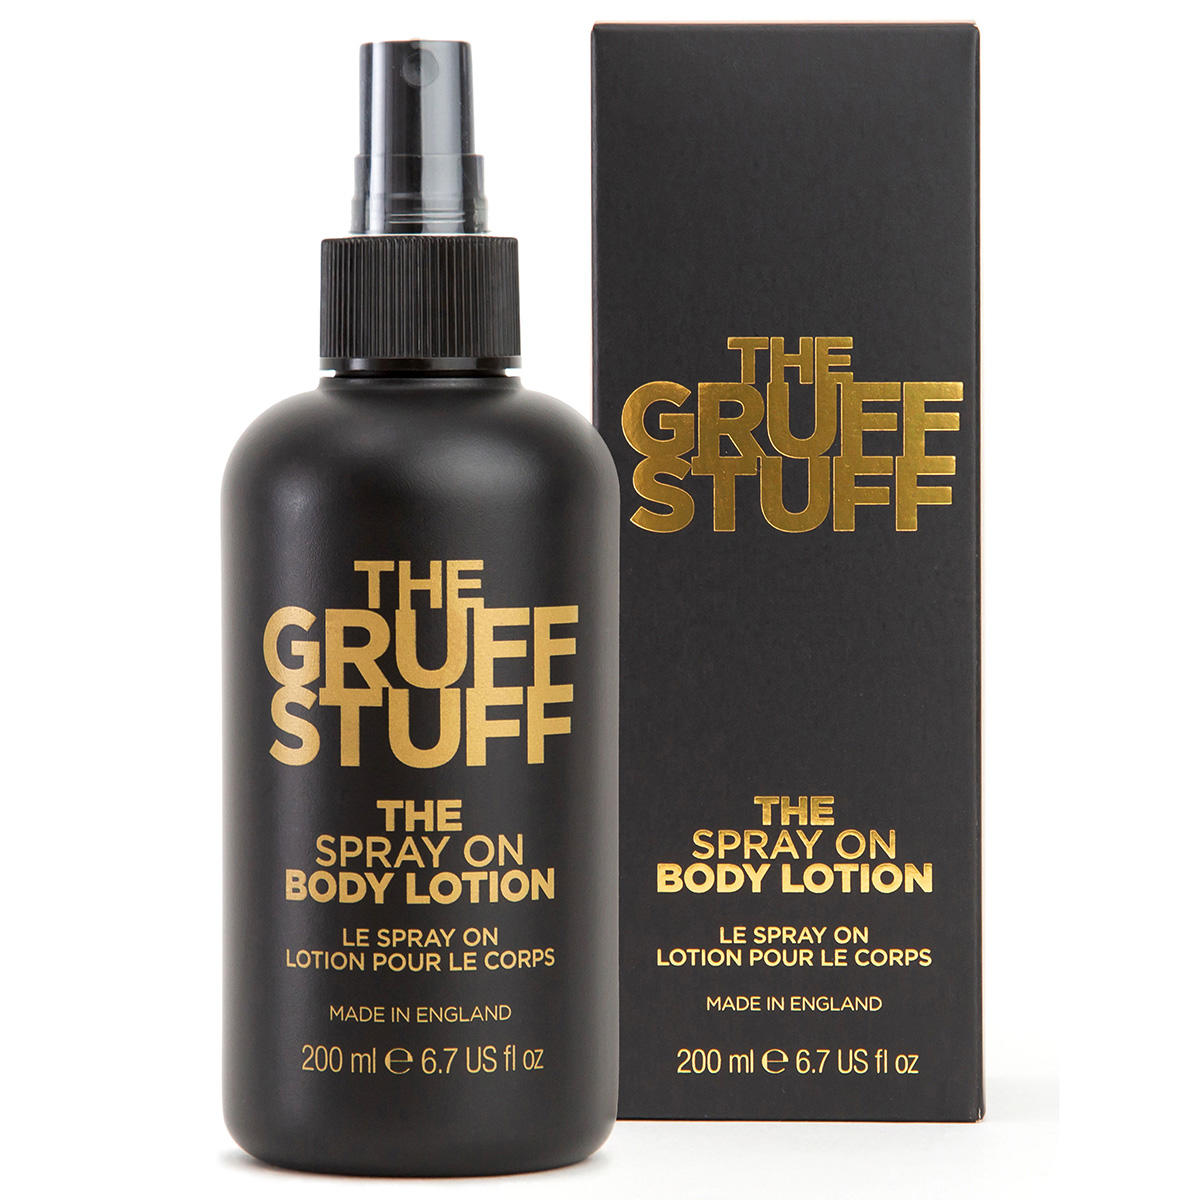 The Gruff Stuff The Spray on Body Lotion 200 ml - 1